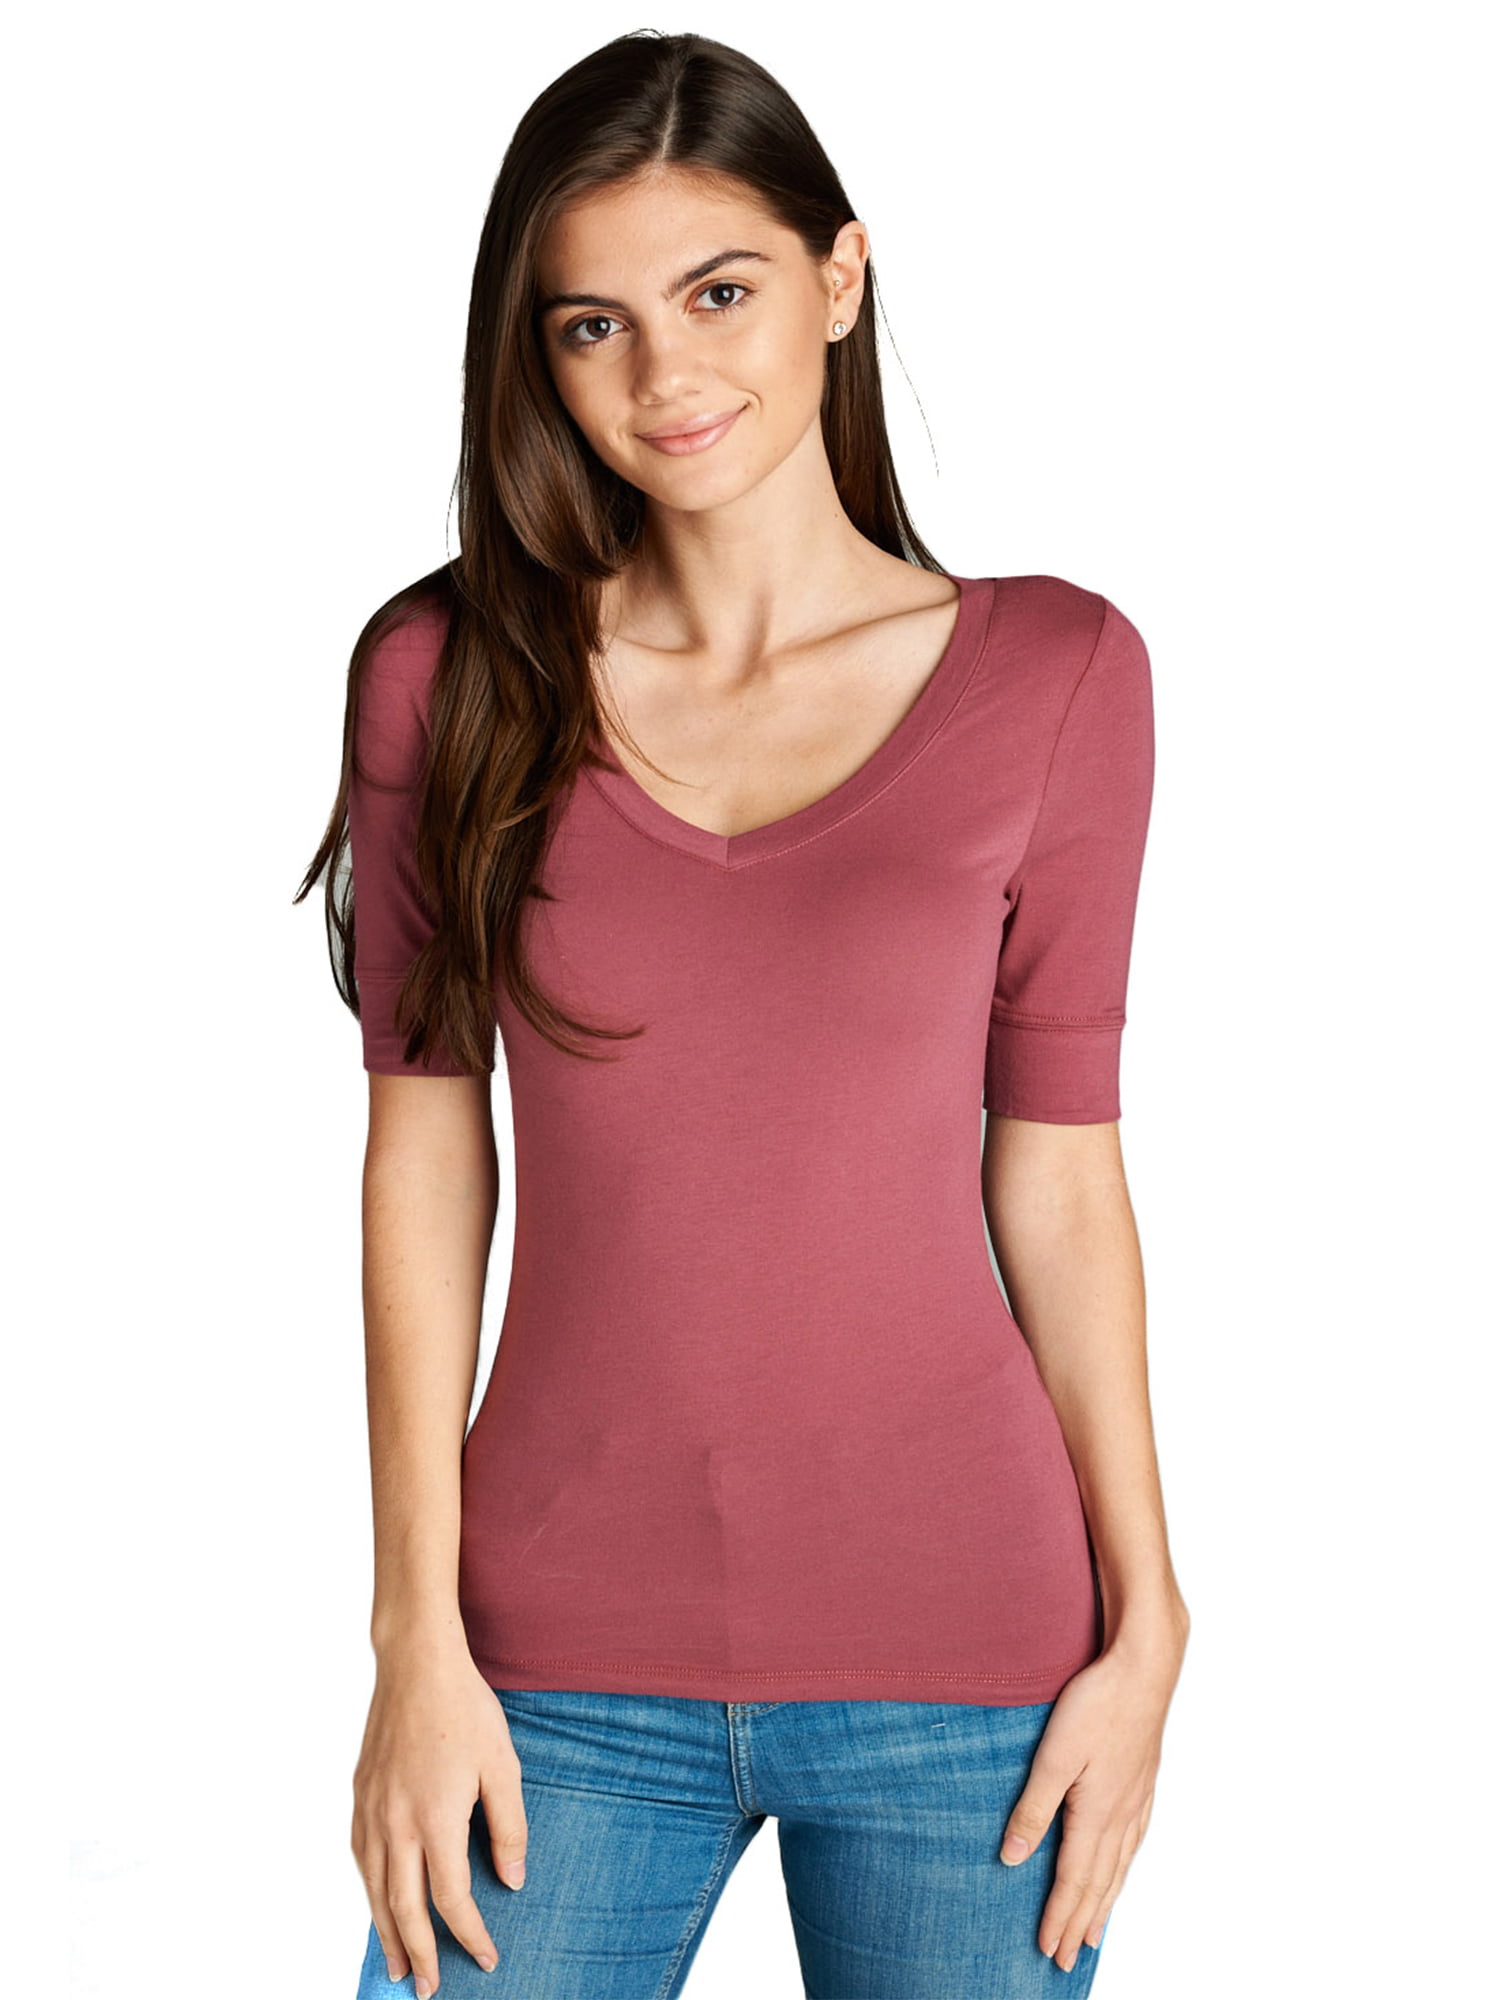 Essential Basic - Essential Basic Women's Cotton Blend V Neck Tee Shirt